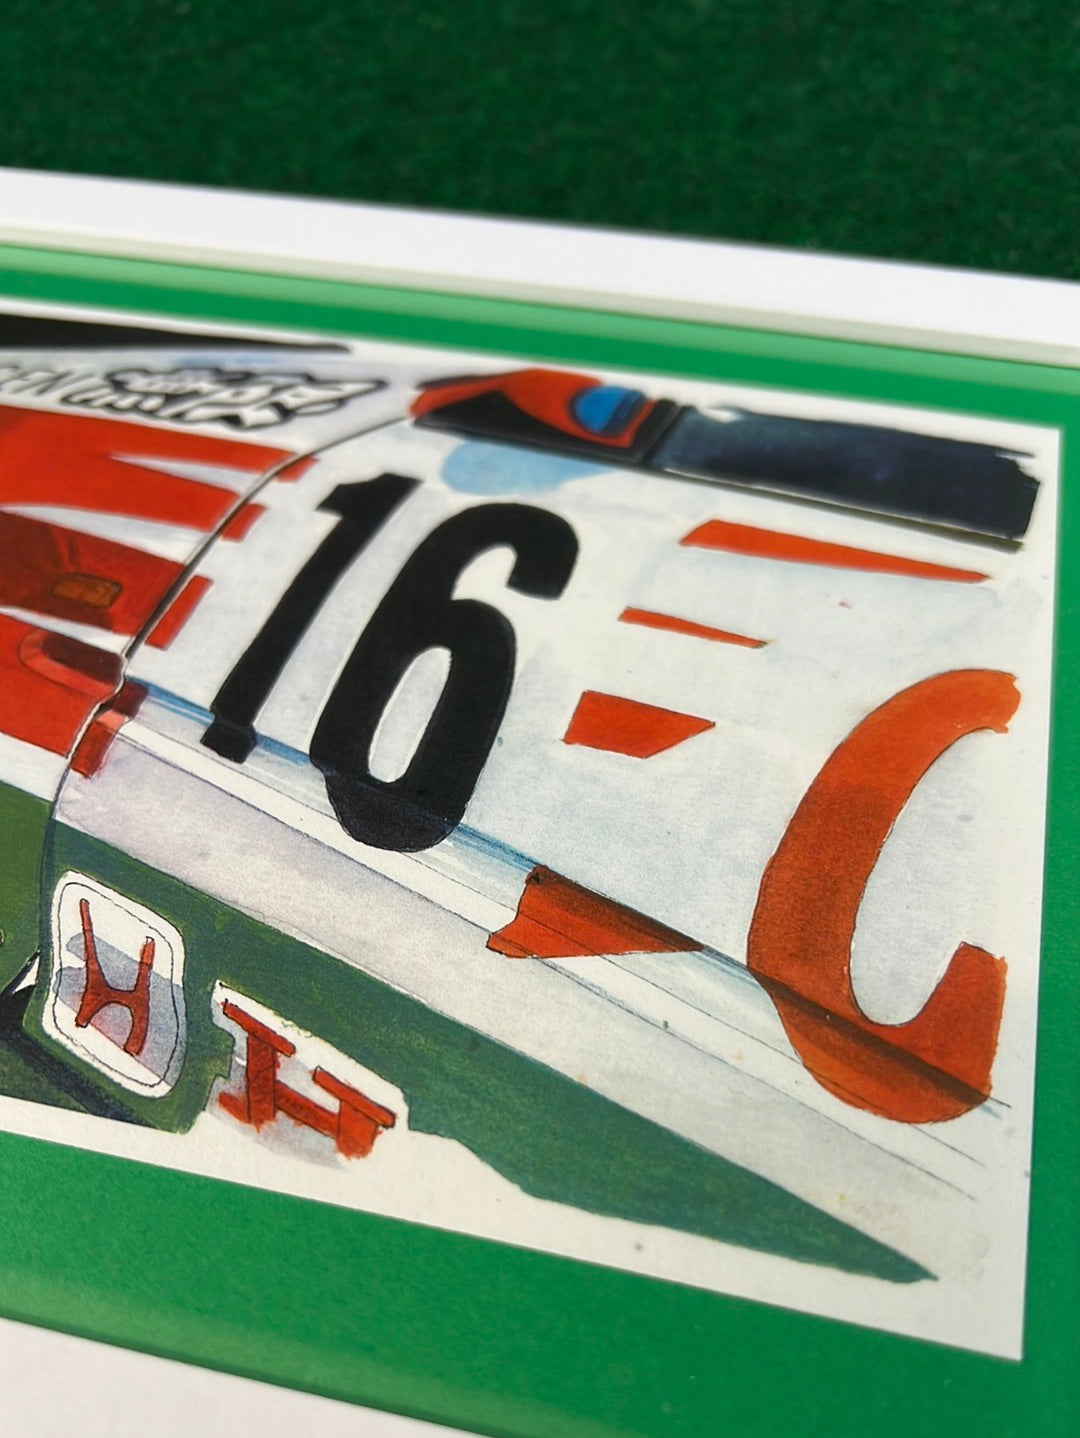 JTCC Castrol Honda Civic Ferio Racecar #16 Door and Wheel View Framed Print